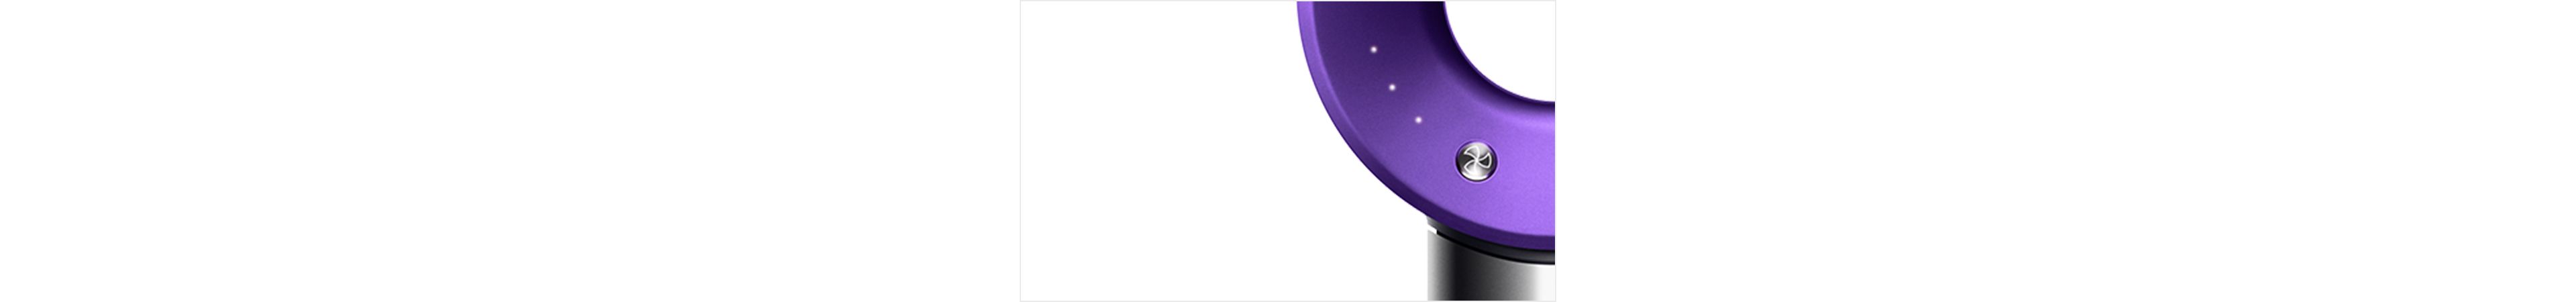 Dyson Supersonic Hair Dryer, Black/Purple - wide 3